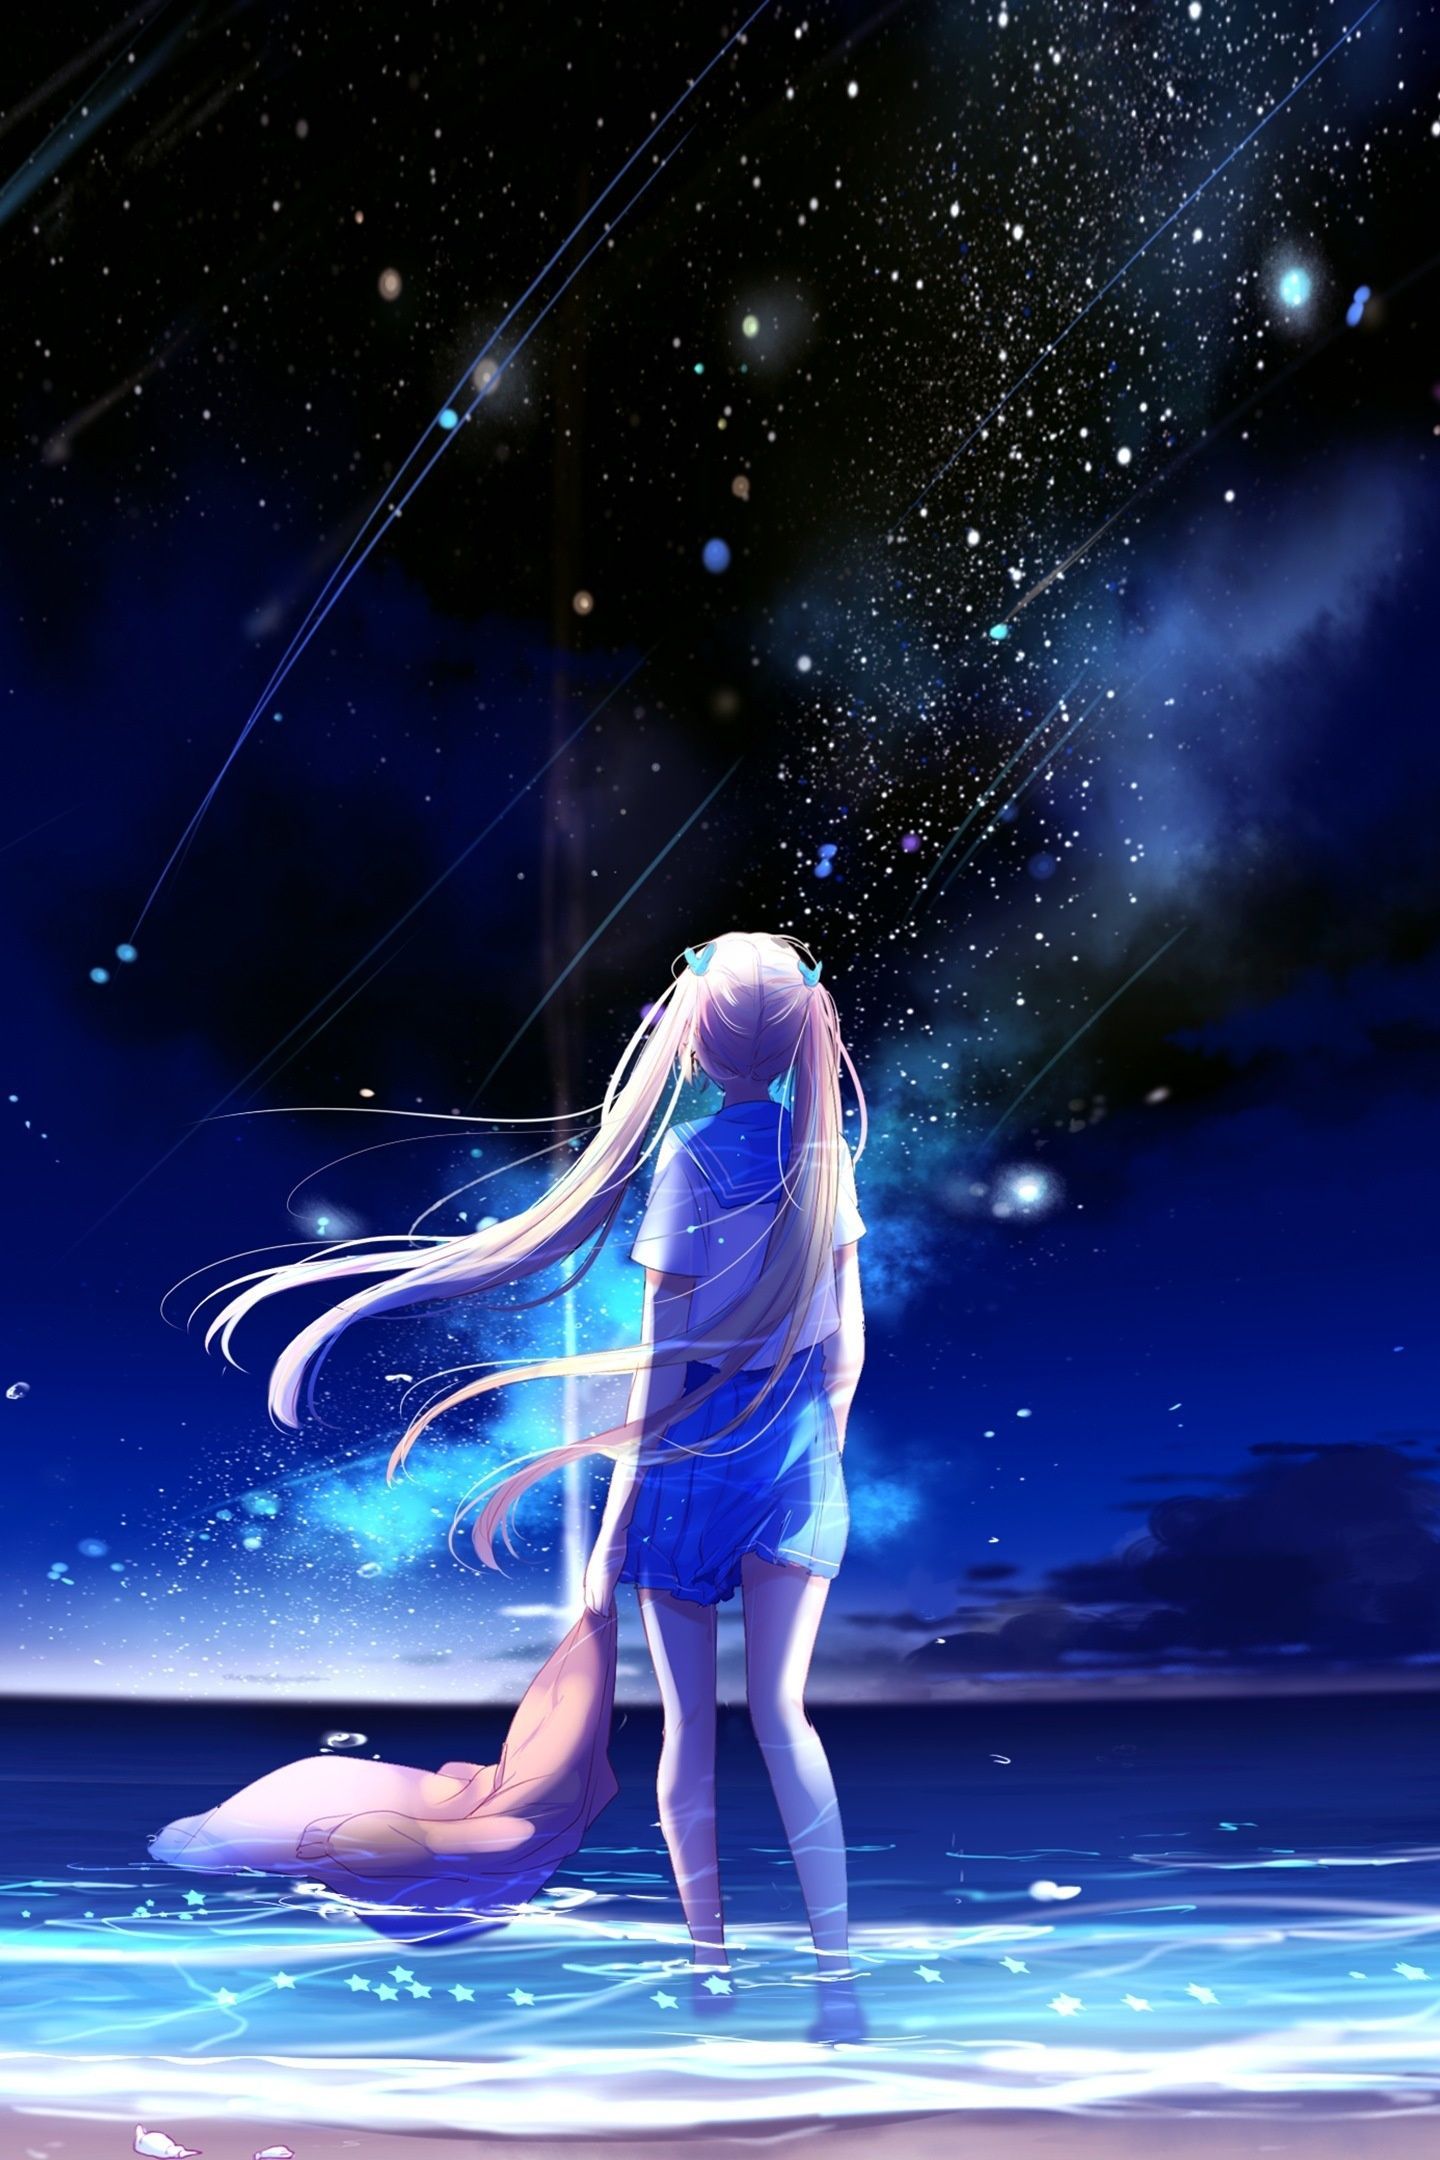 Anime Girl Galaxy Wallpaper Free Anime Girl Galaxy Background